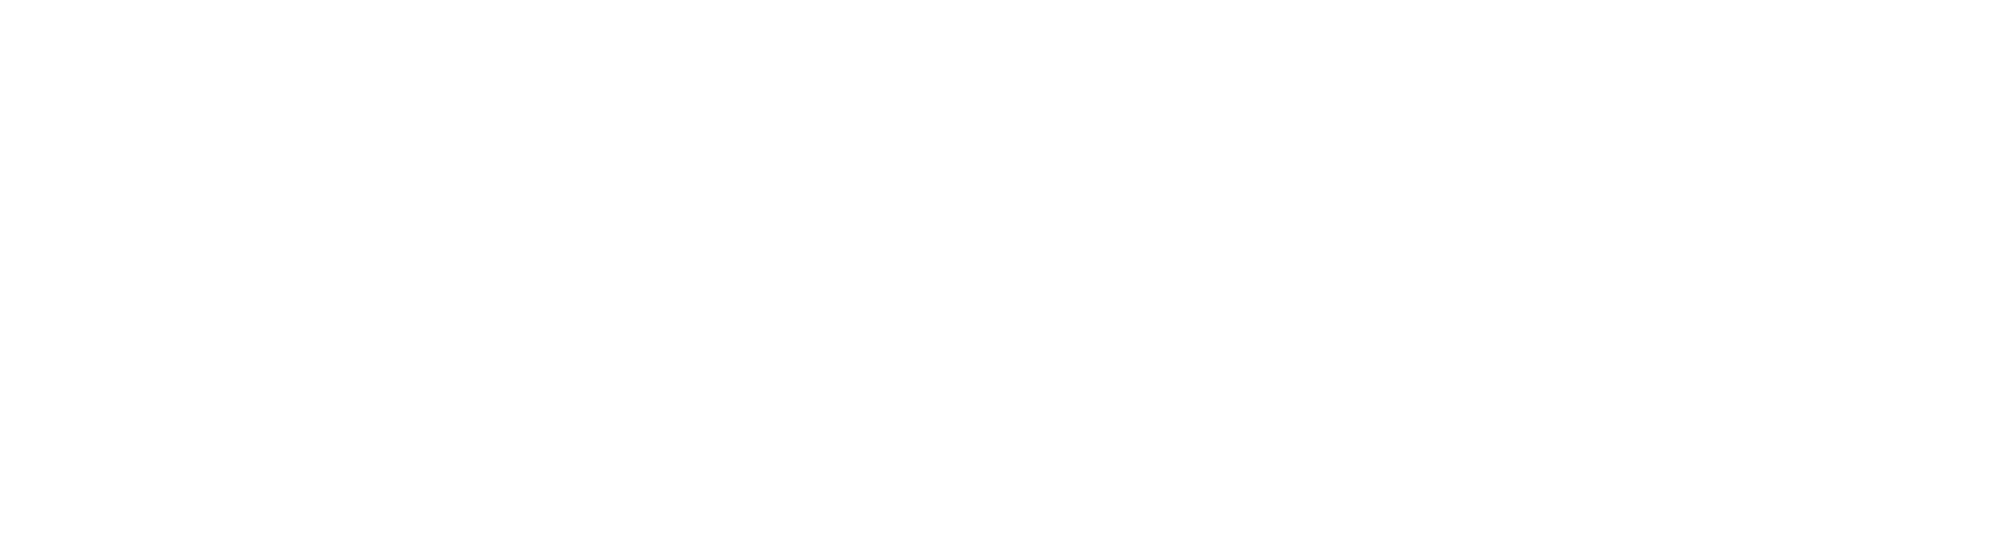 Emory University Logo with Shield